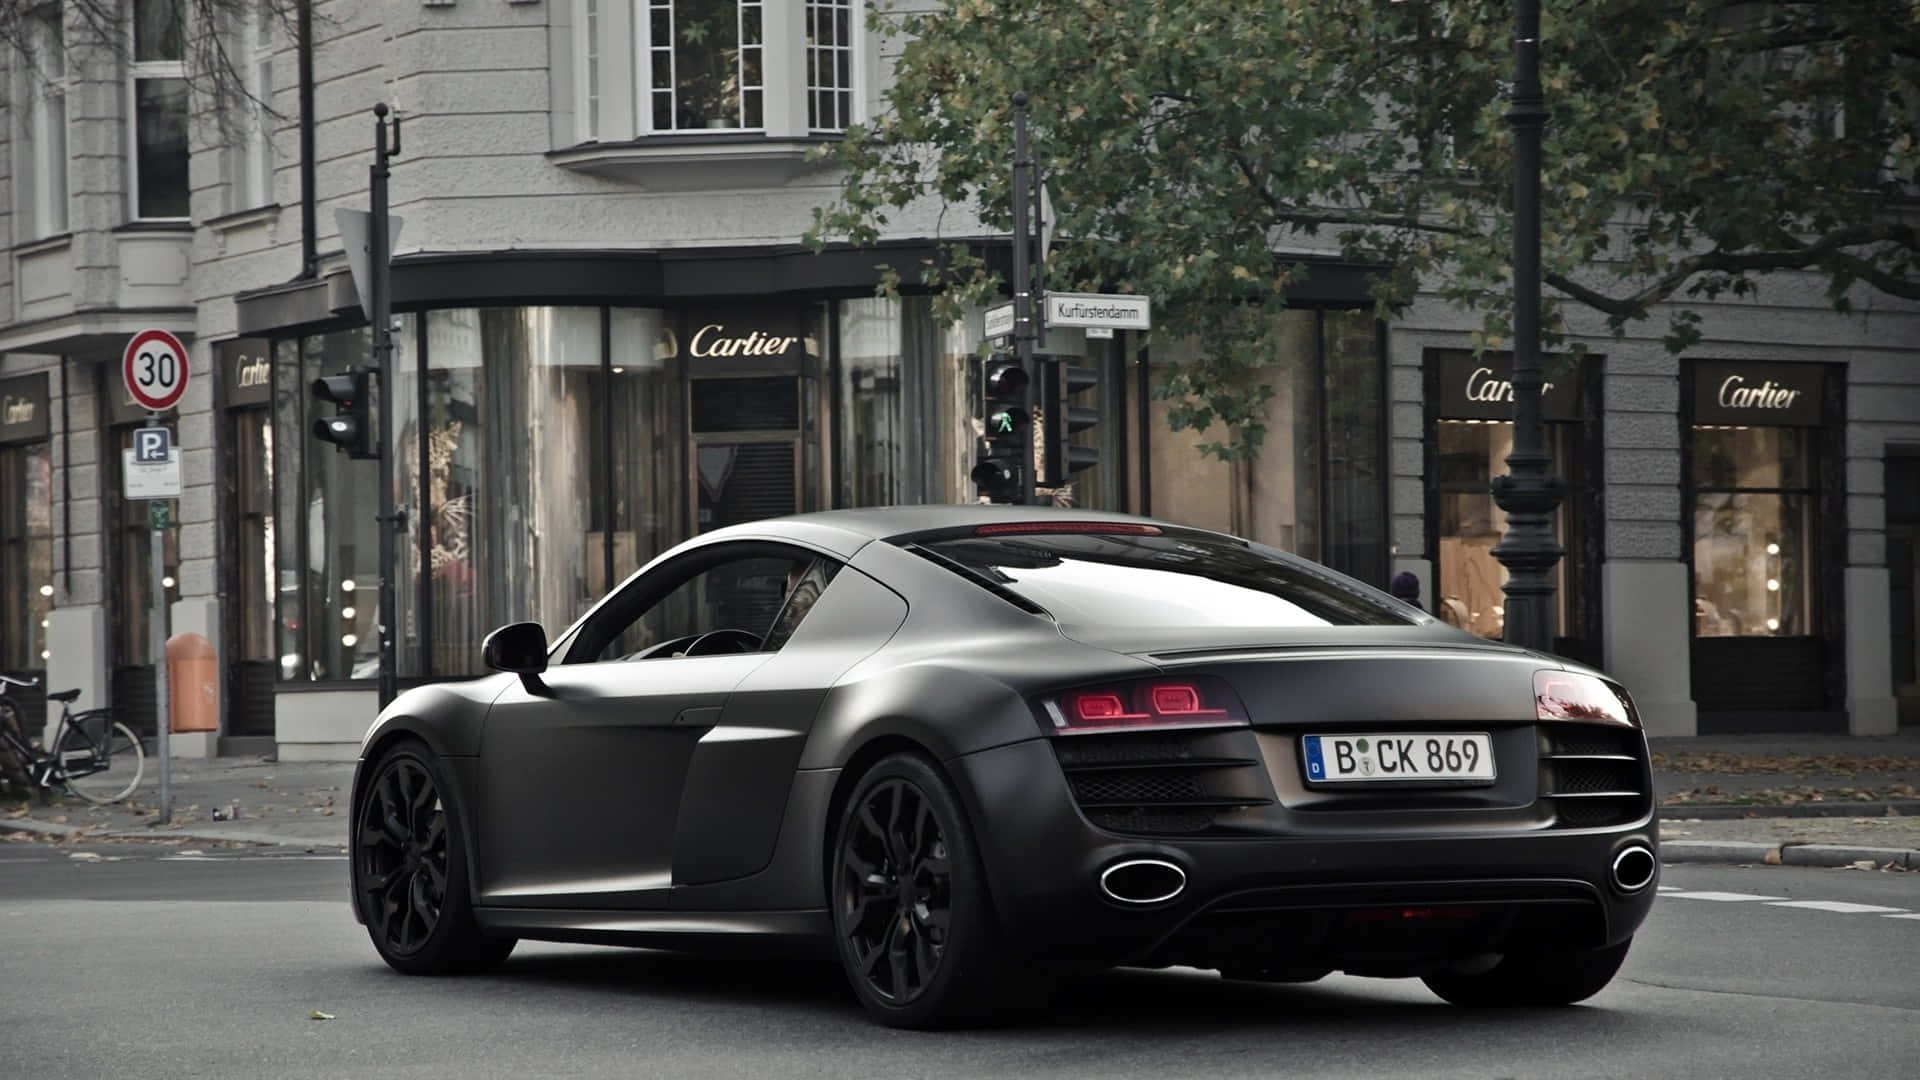 A Sleek Black Luxury Car